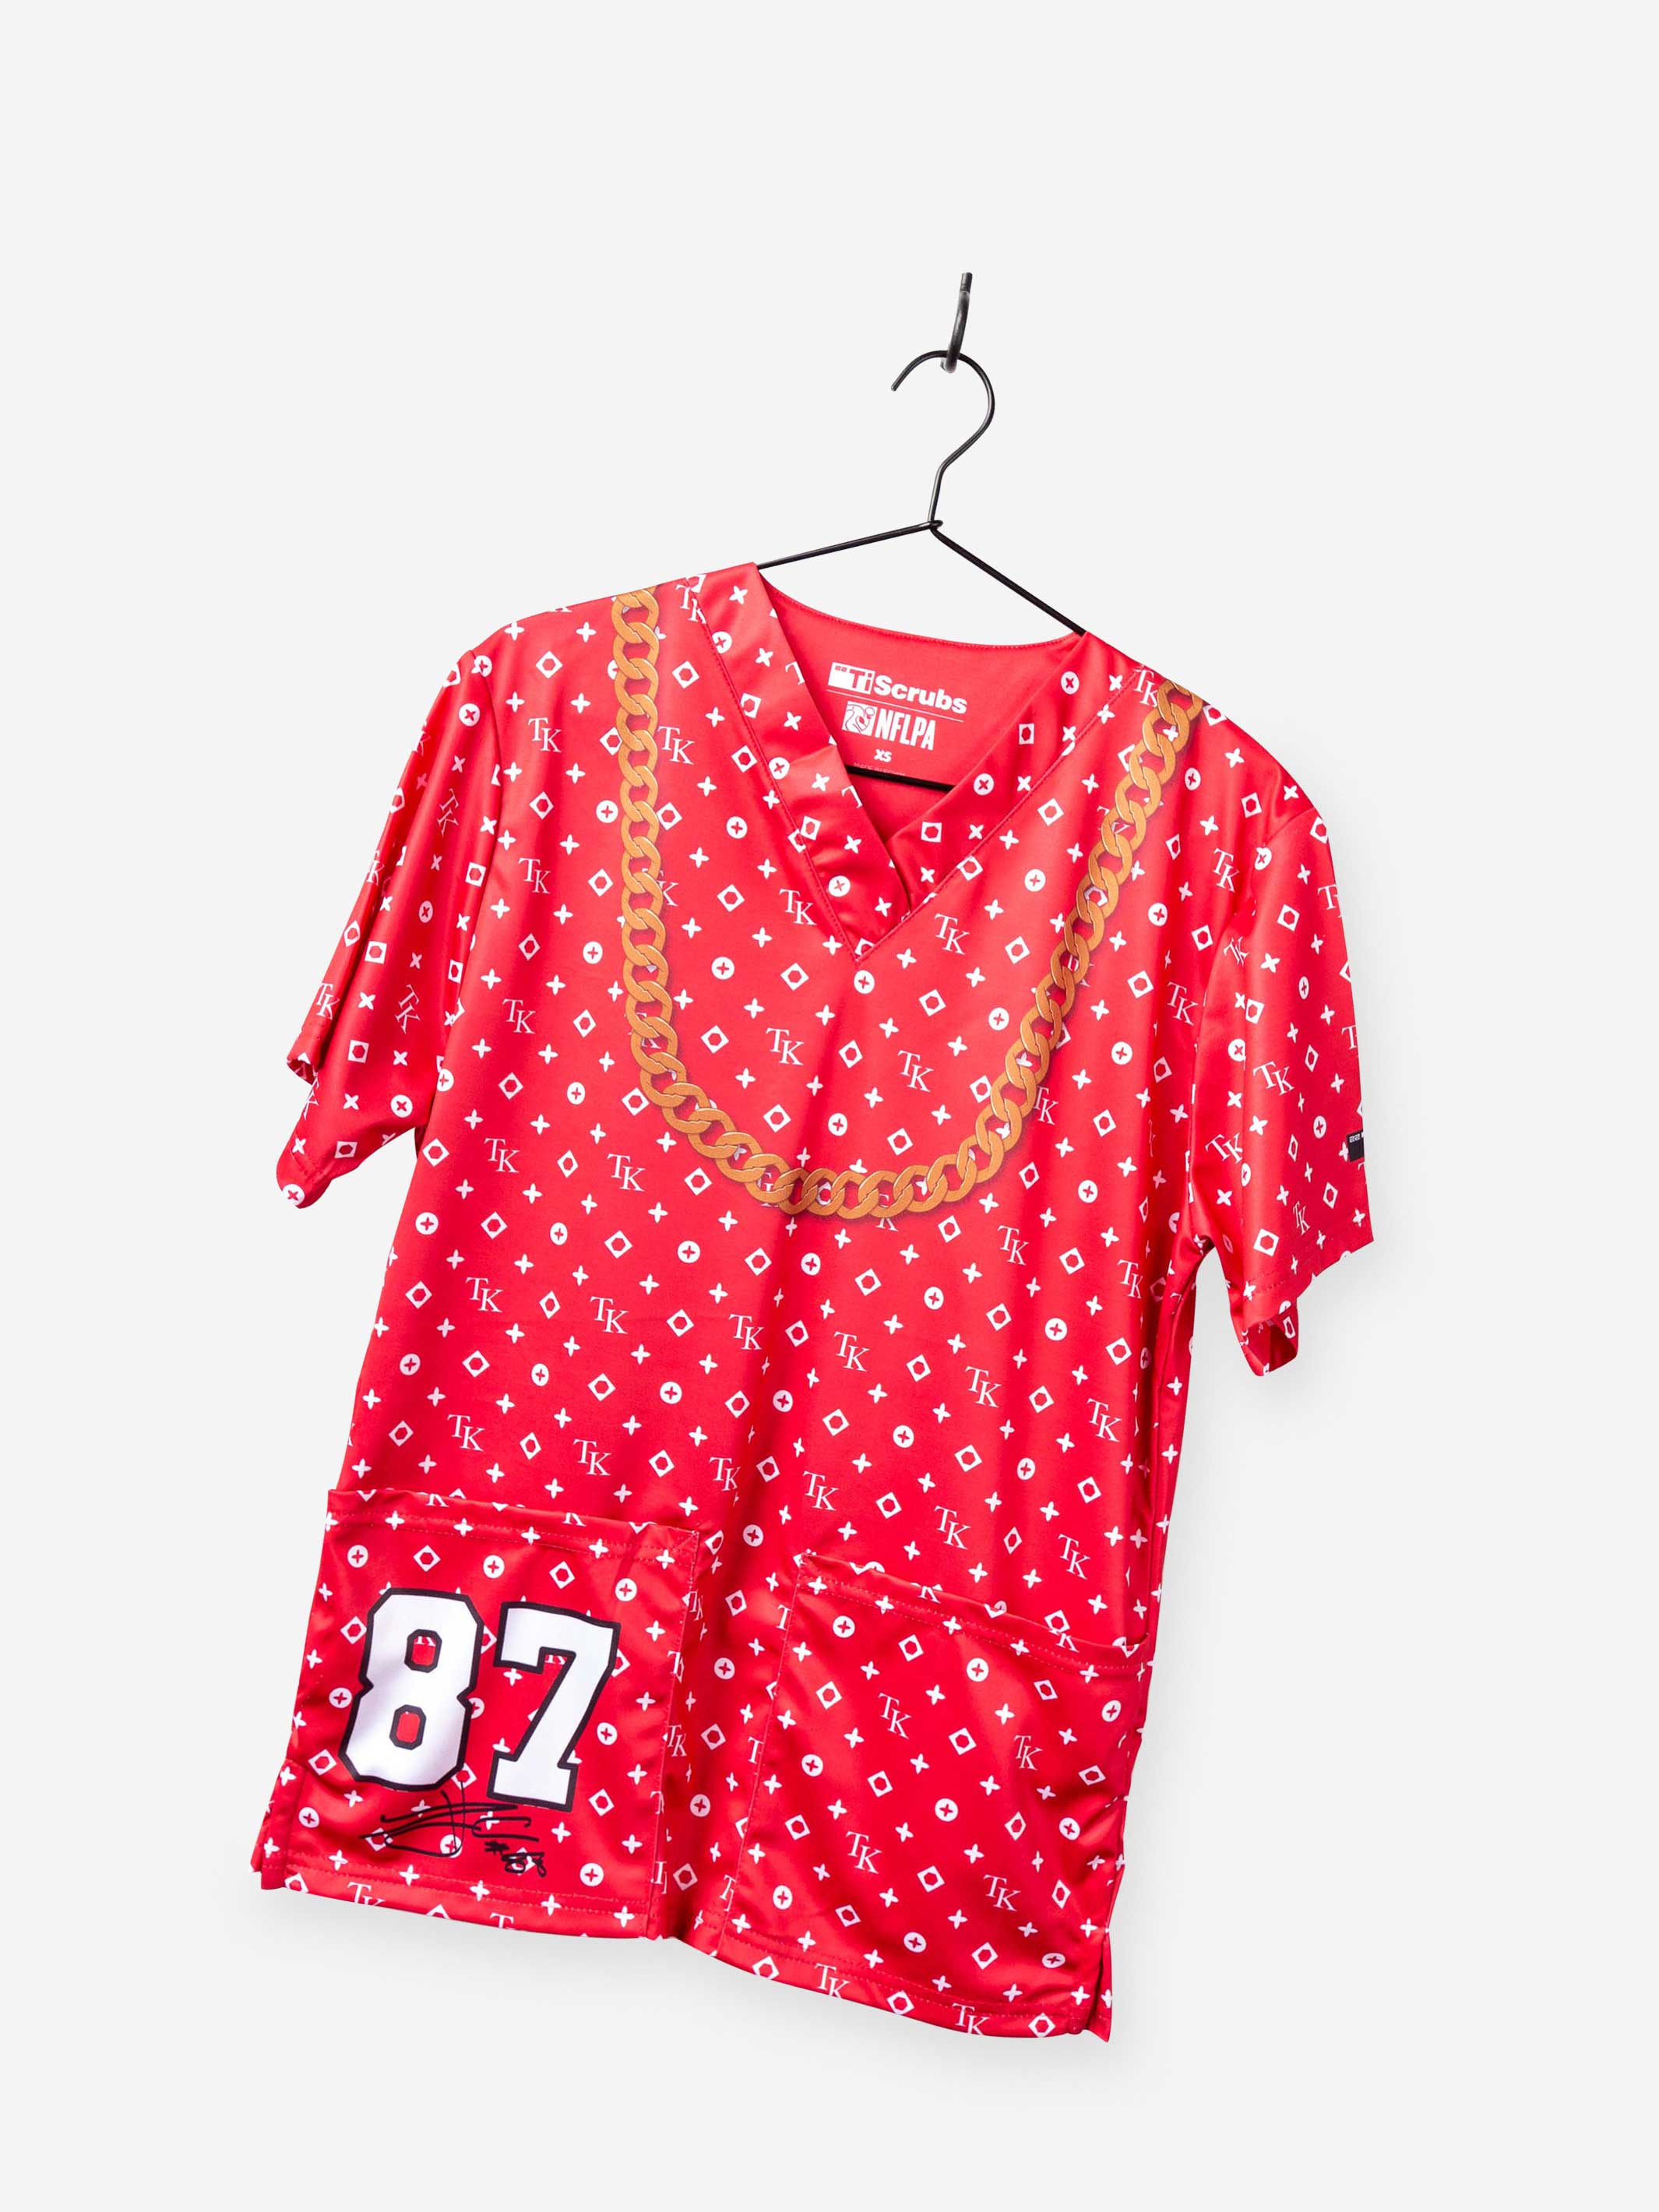 Mens Travis Kelce NFL Fashion scrub top Kansas City Football red and white stretch fabric